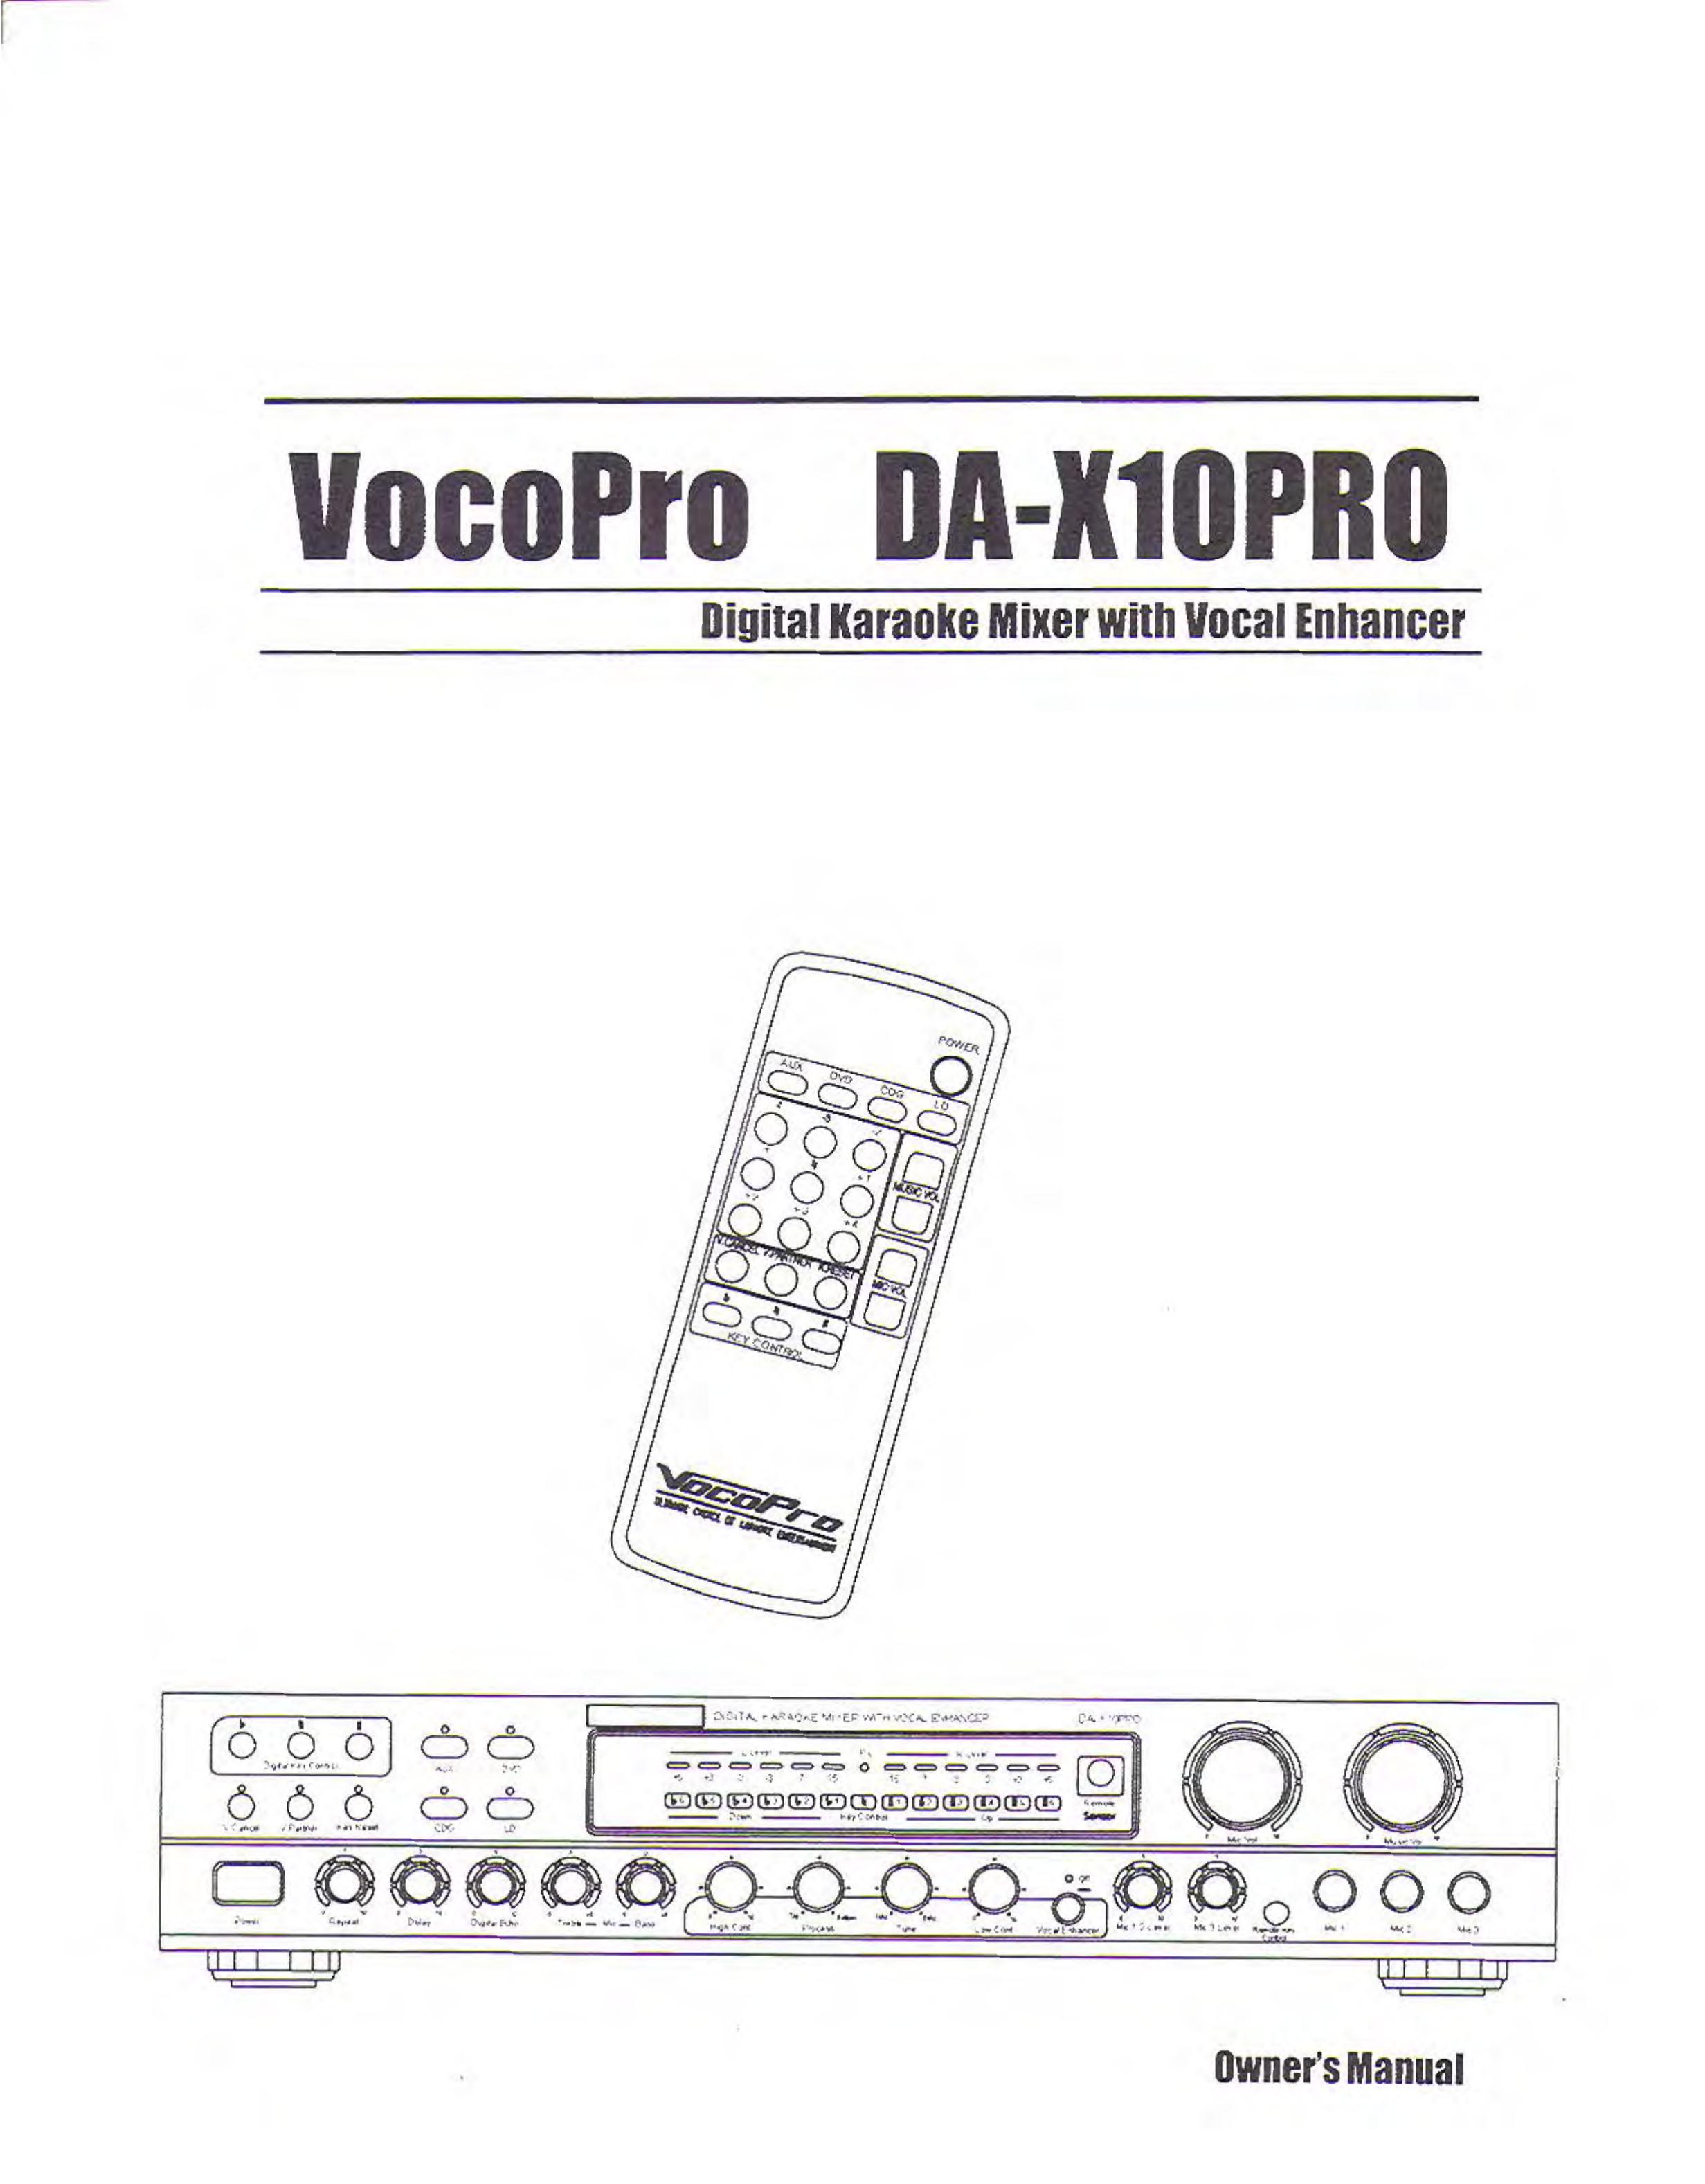 VocoPro da-x10pro Karaoke Machine User Manual